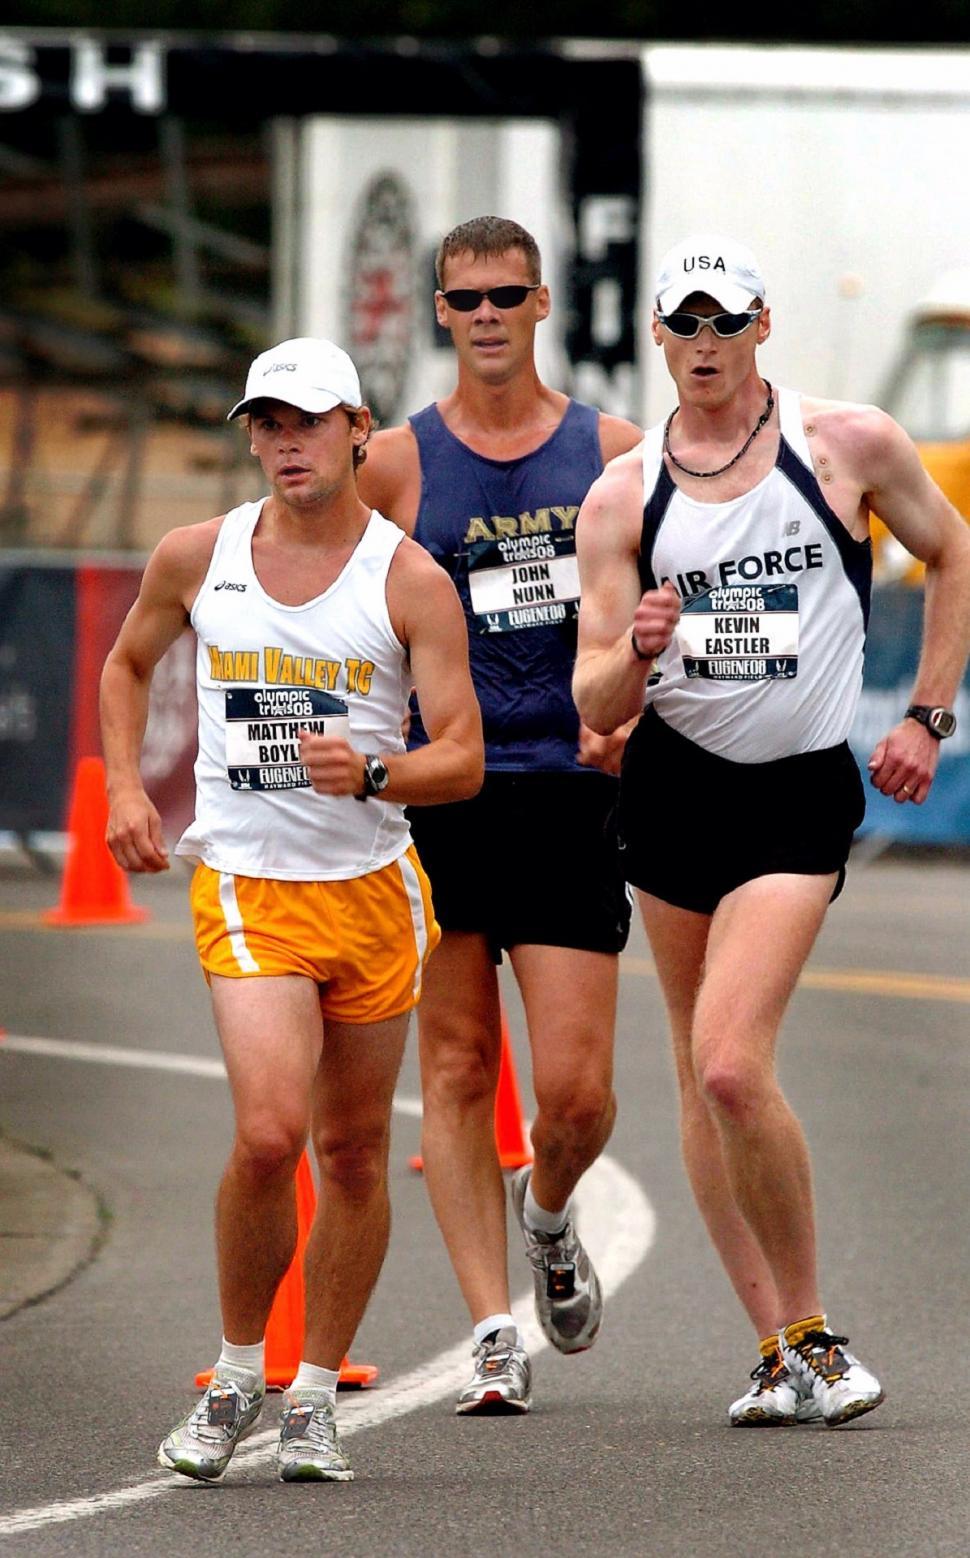 Free Image of Three Men Running in a Marathon 